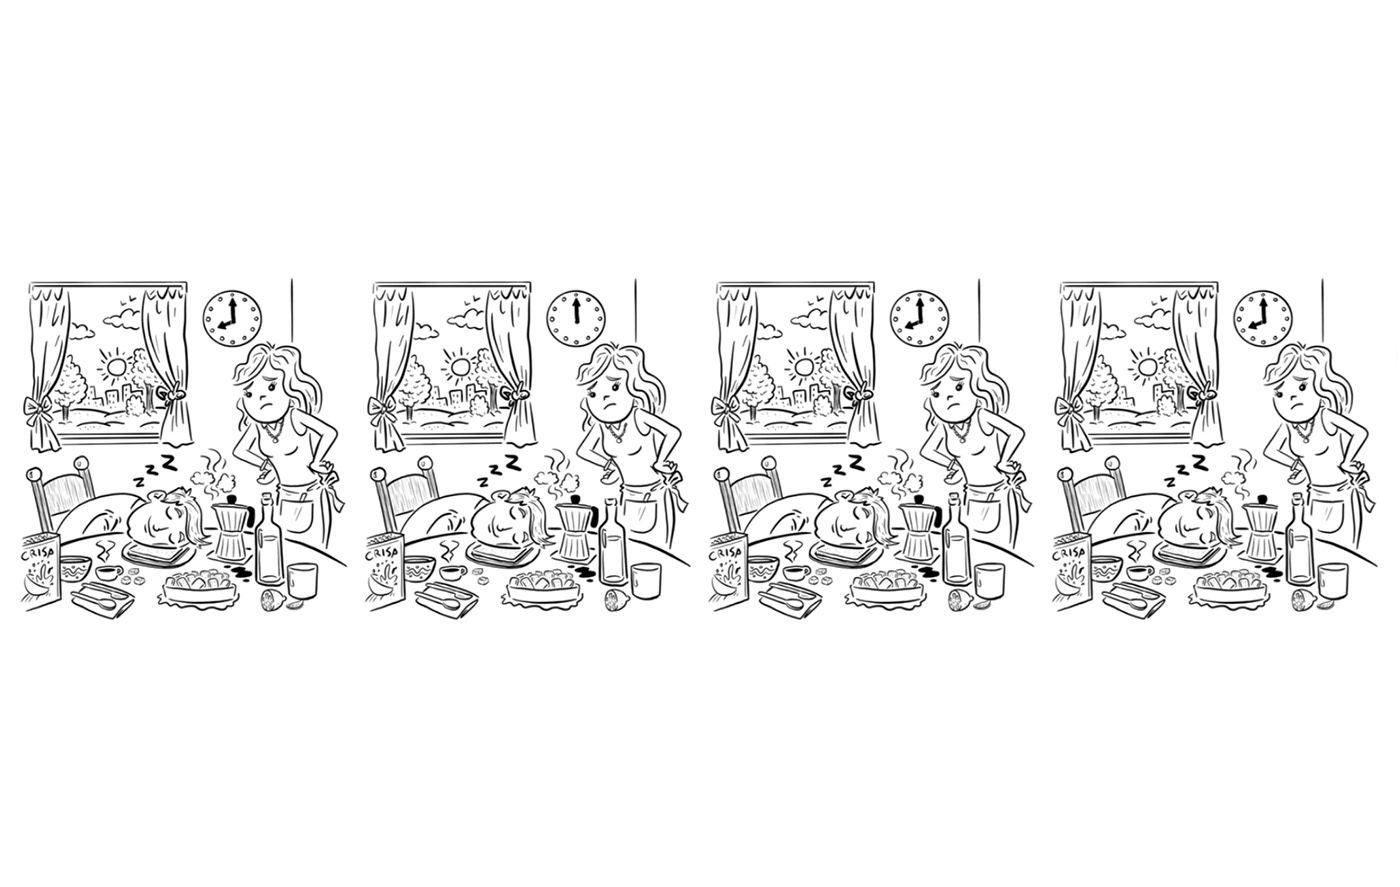 gabriele bonavera bonavera enigmistica puzzles brain teasers illustrazione vignette